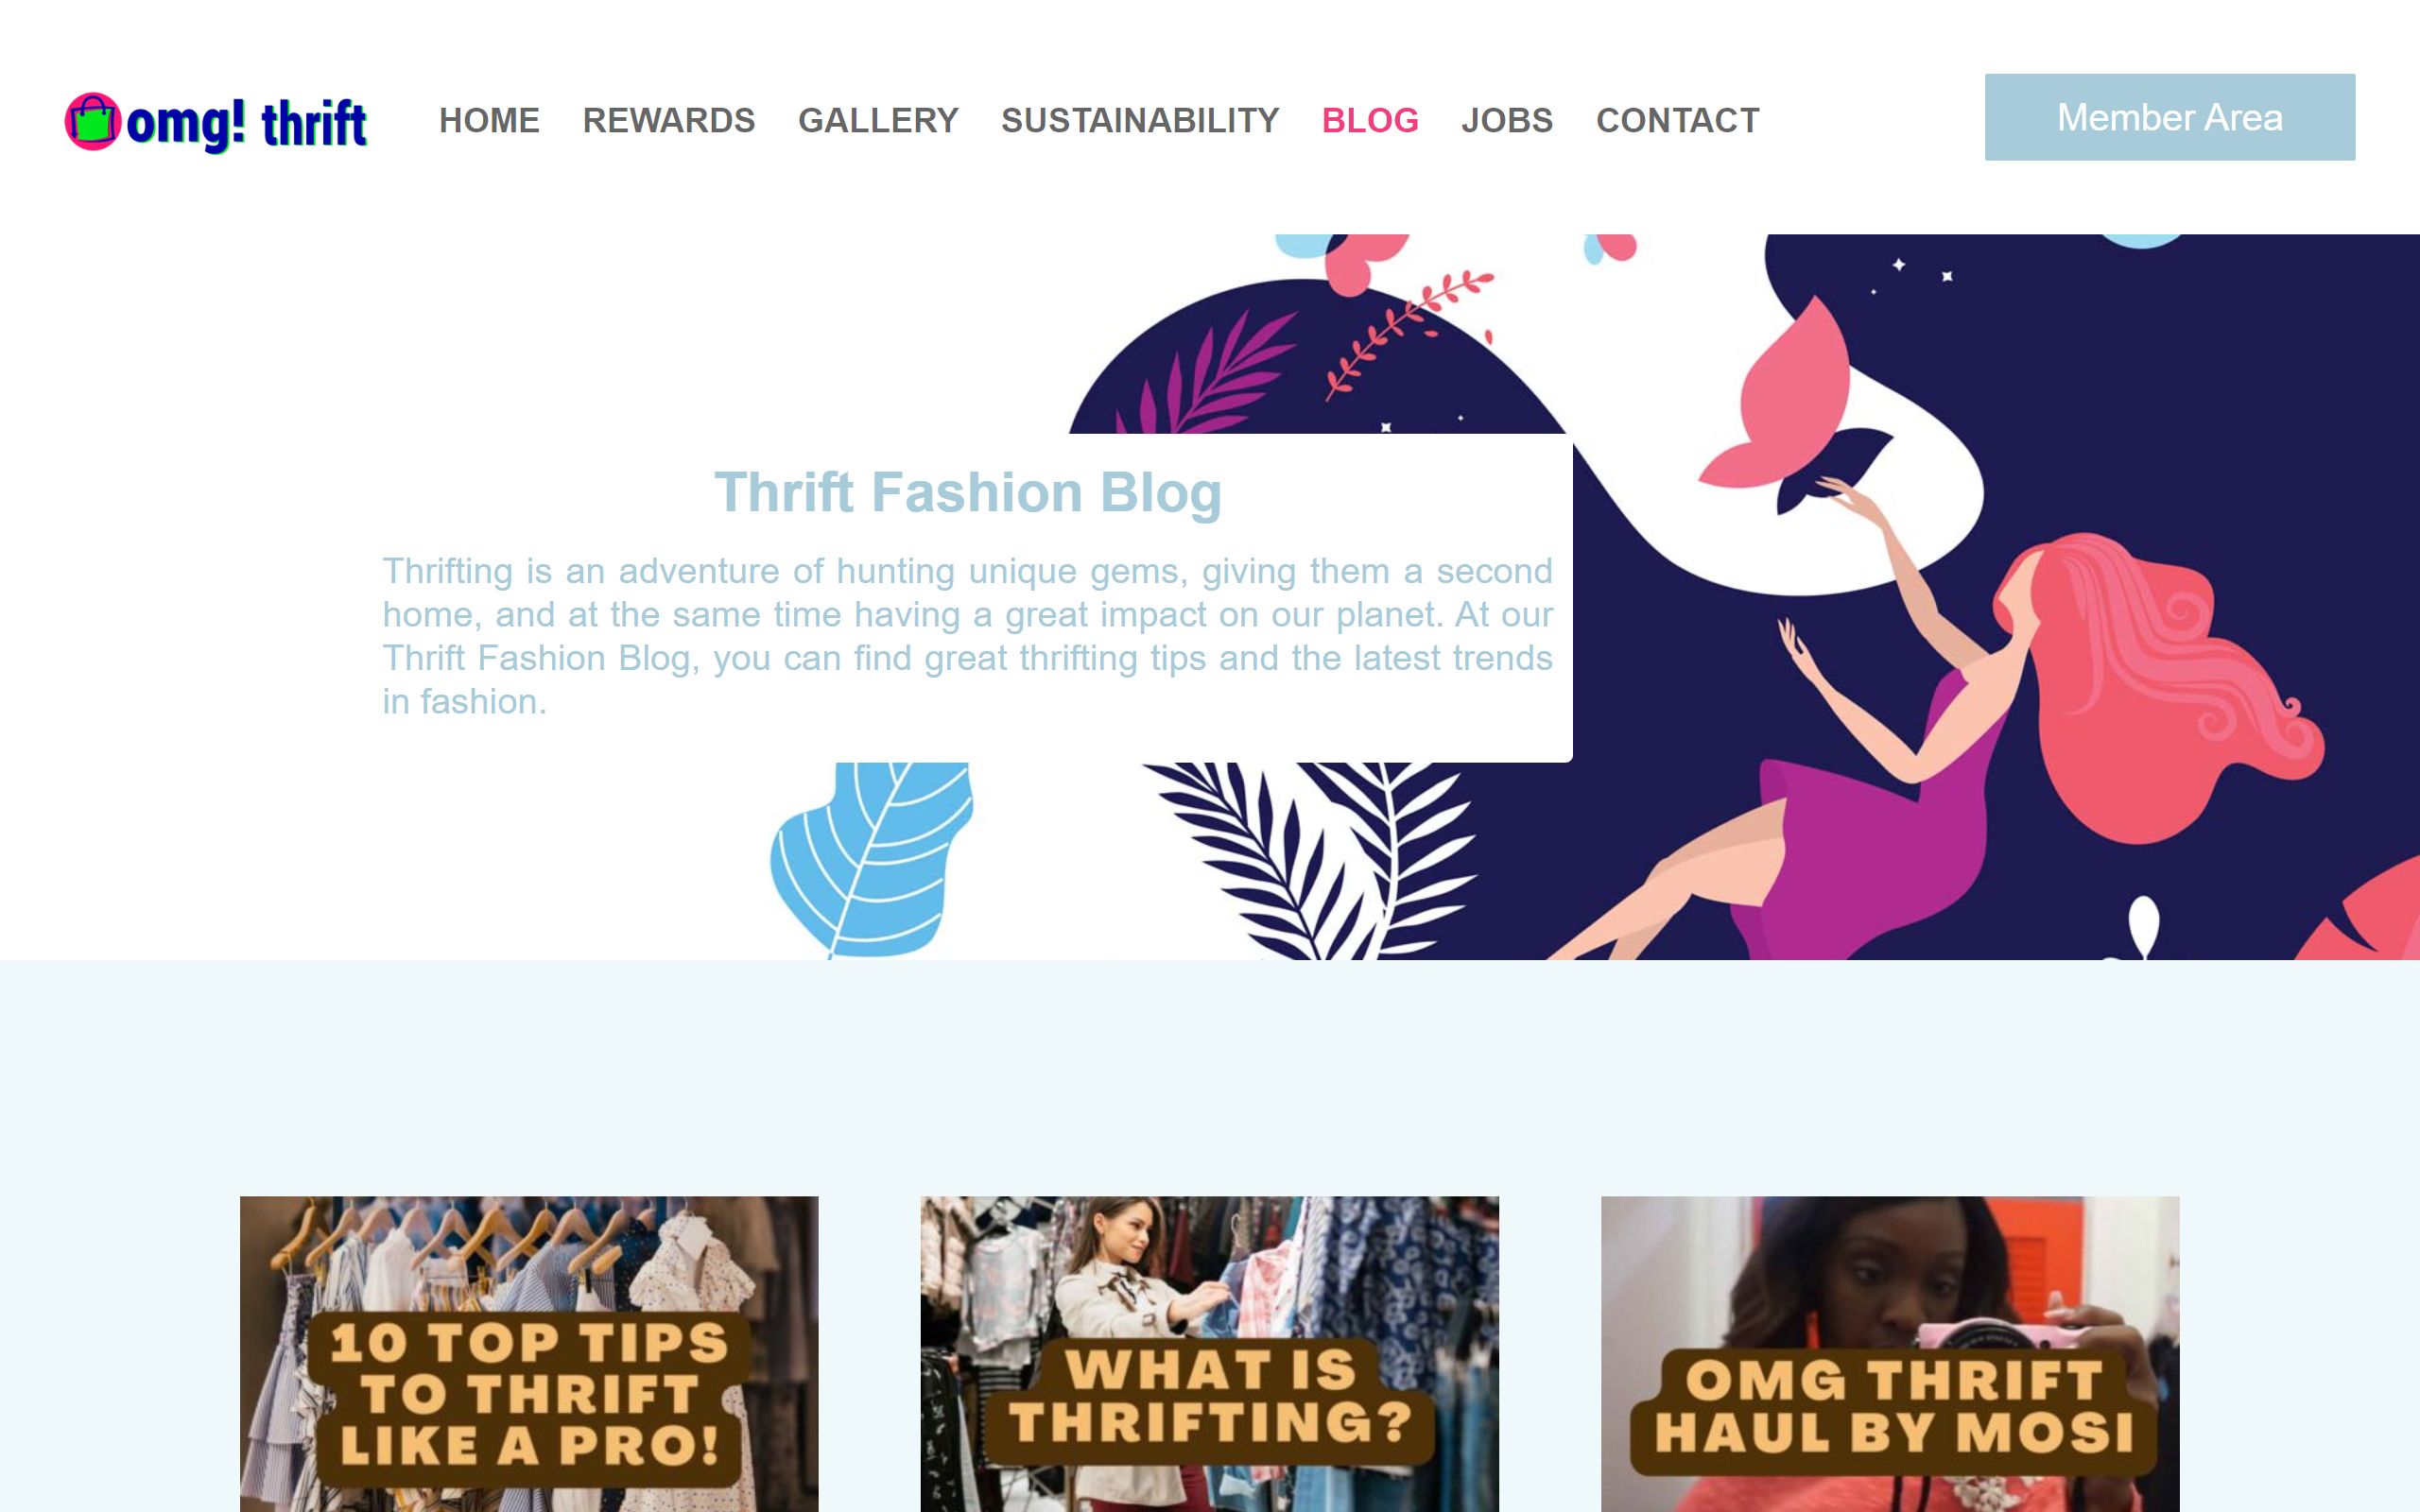 OMG! Thrift fashion blog